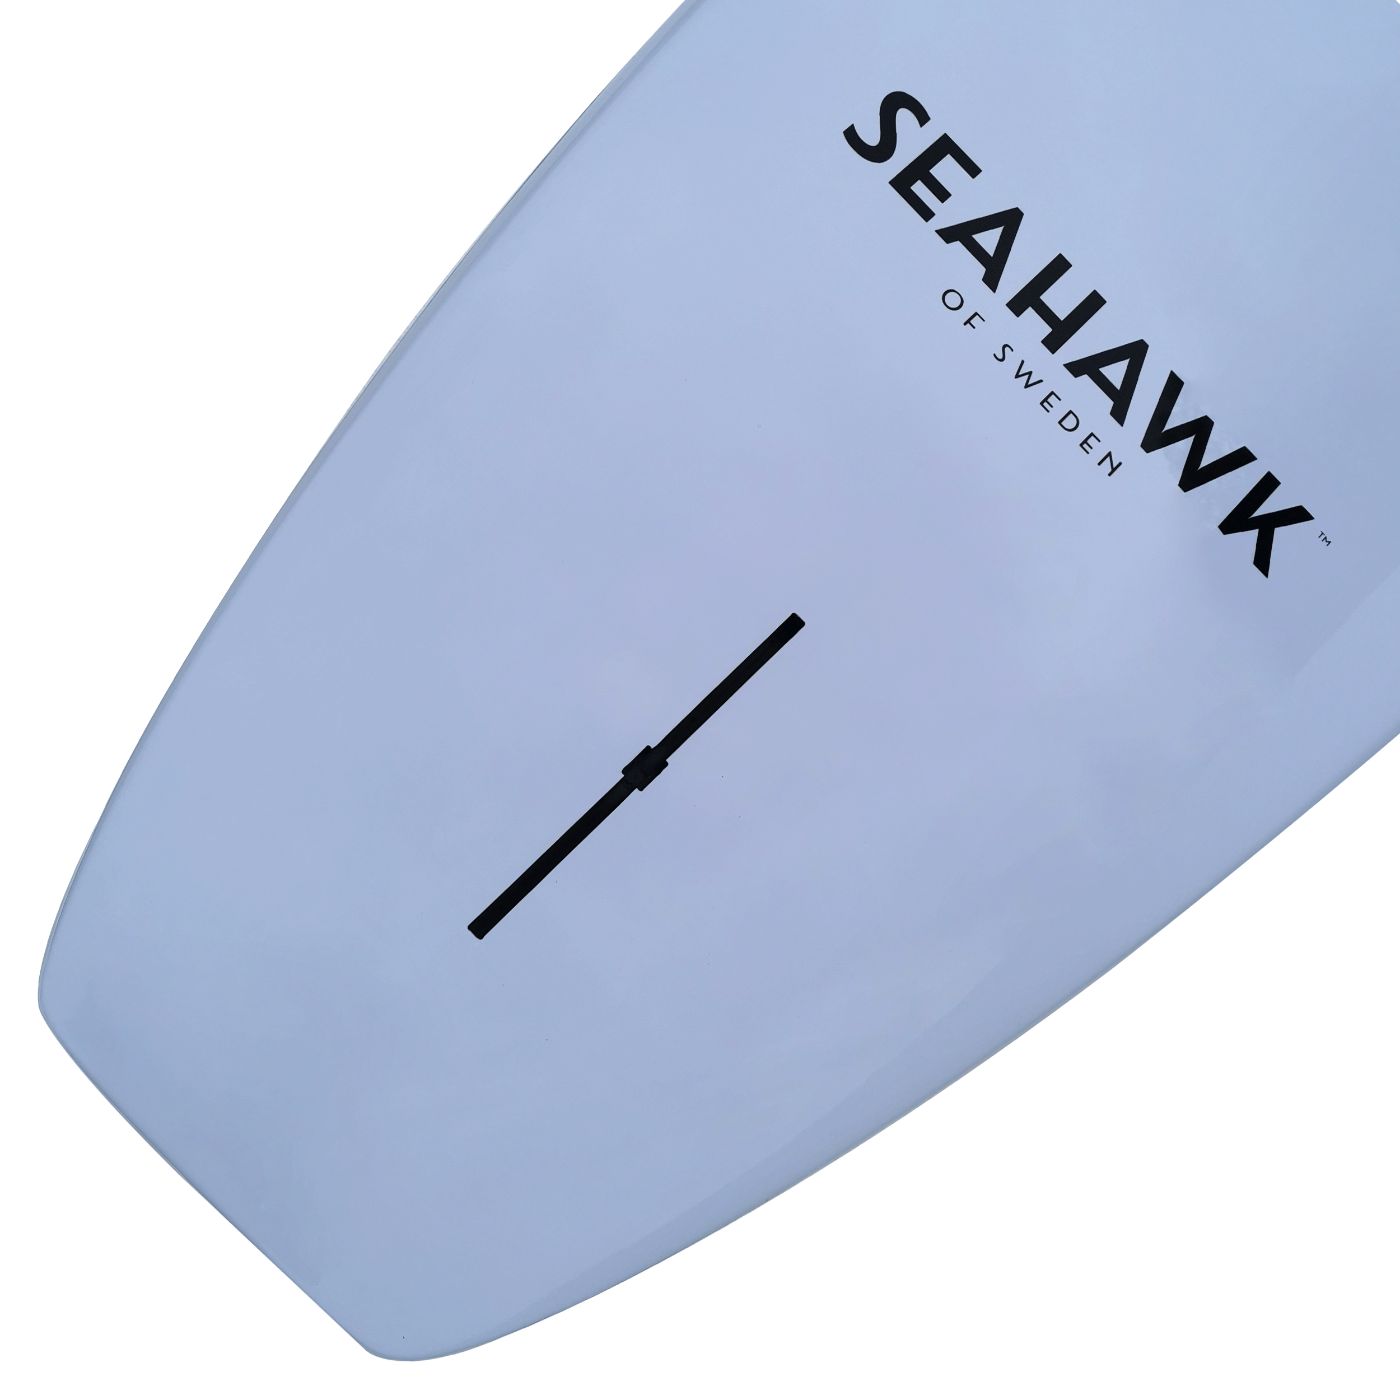 Seahawk 11.6 - Hård SUP